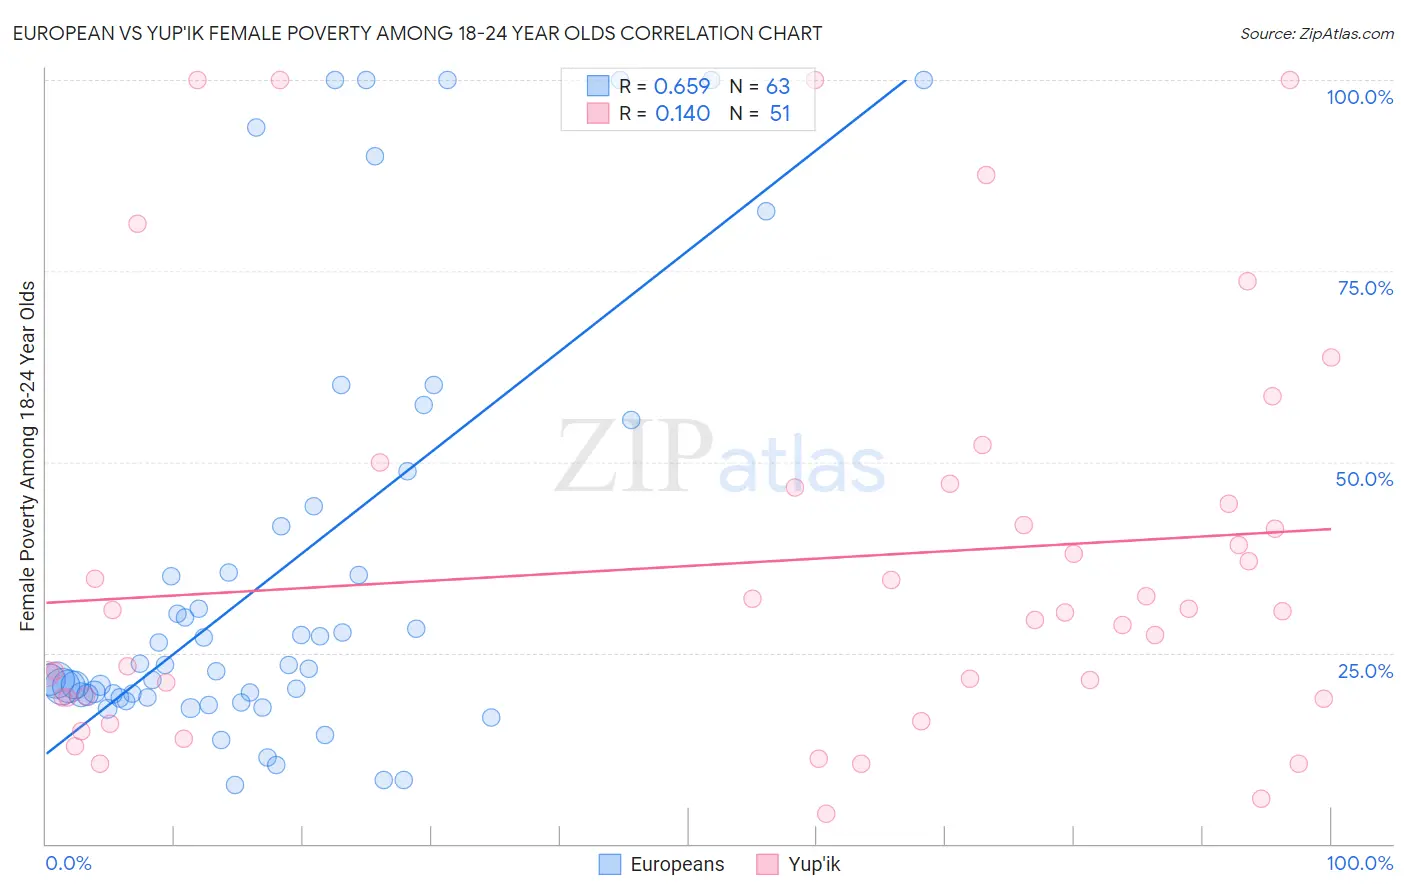 European vs Yup'ik Female Poverty Among 18-24 Year Olds